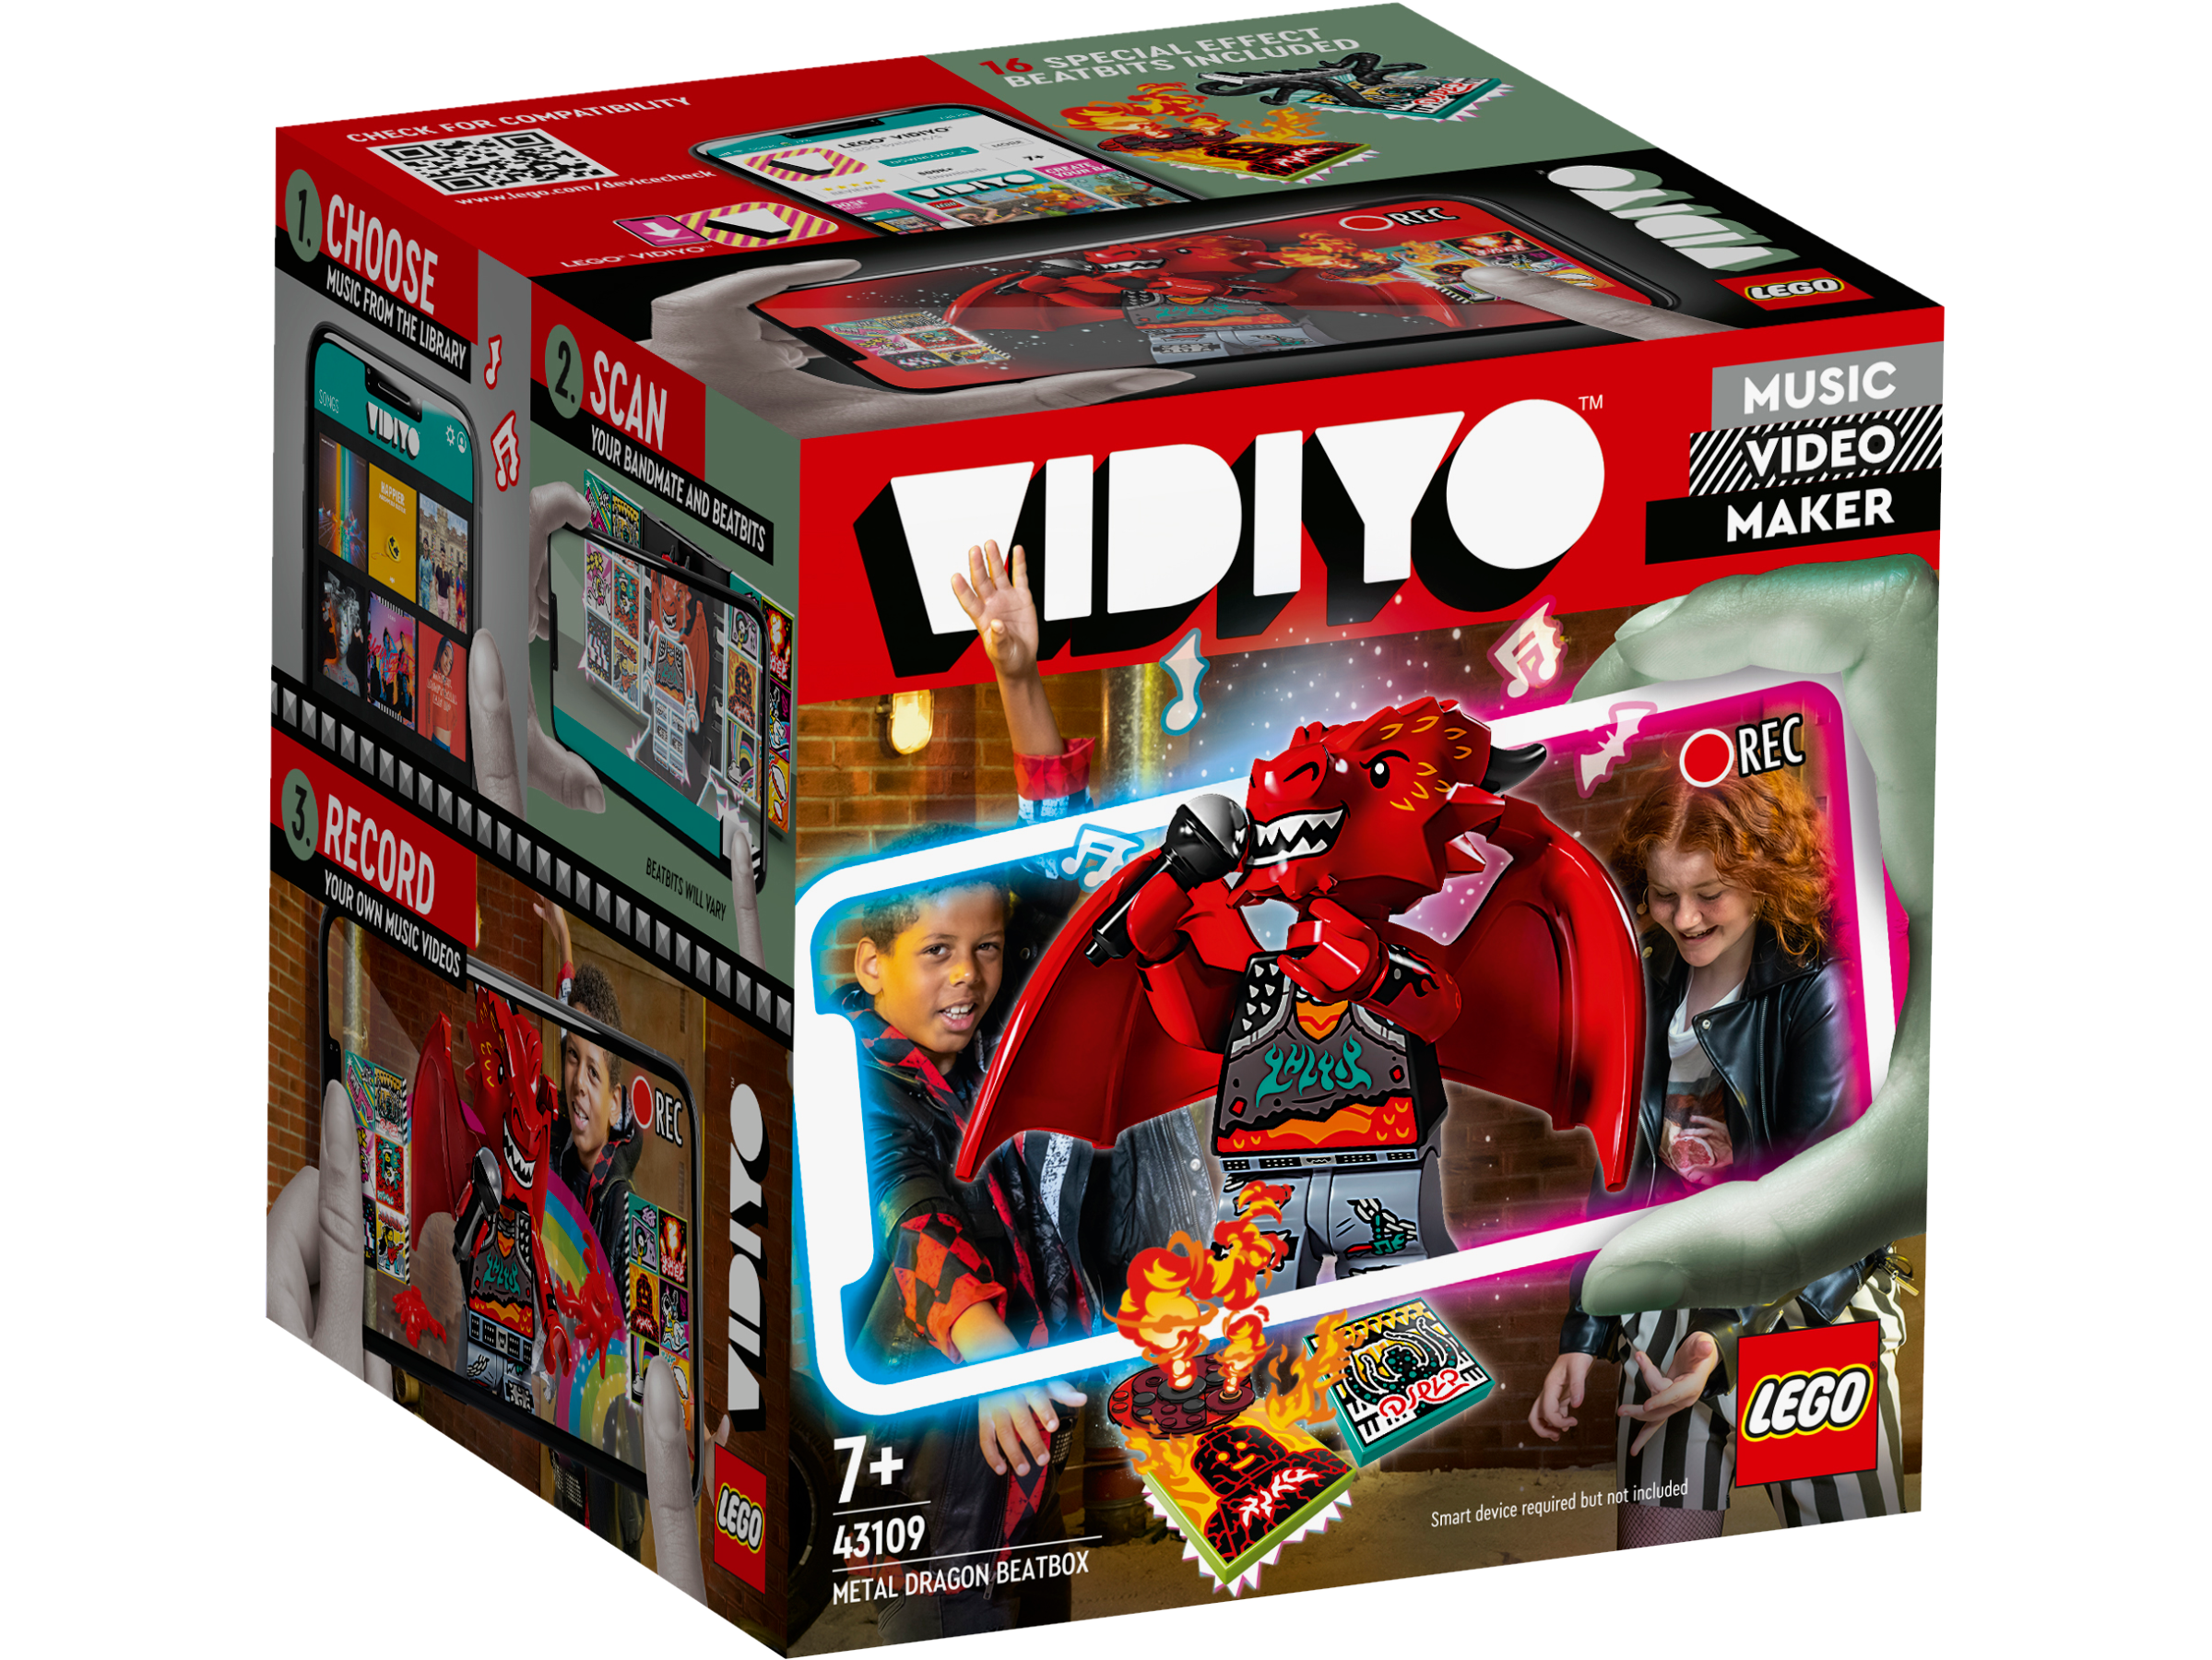 Lego 43109 VIDIYO Metal Dragon Beatbox Video Maker